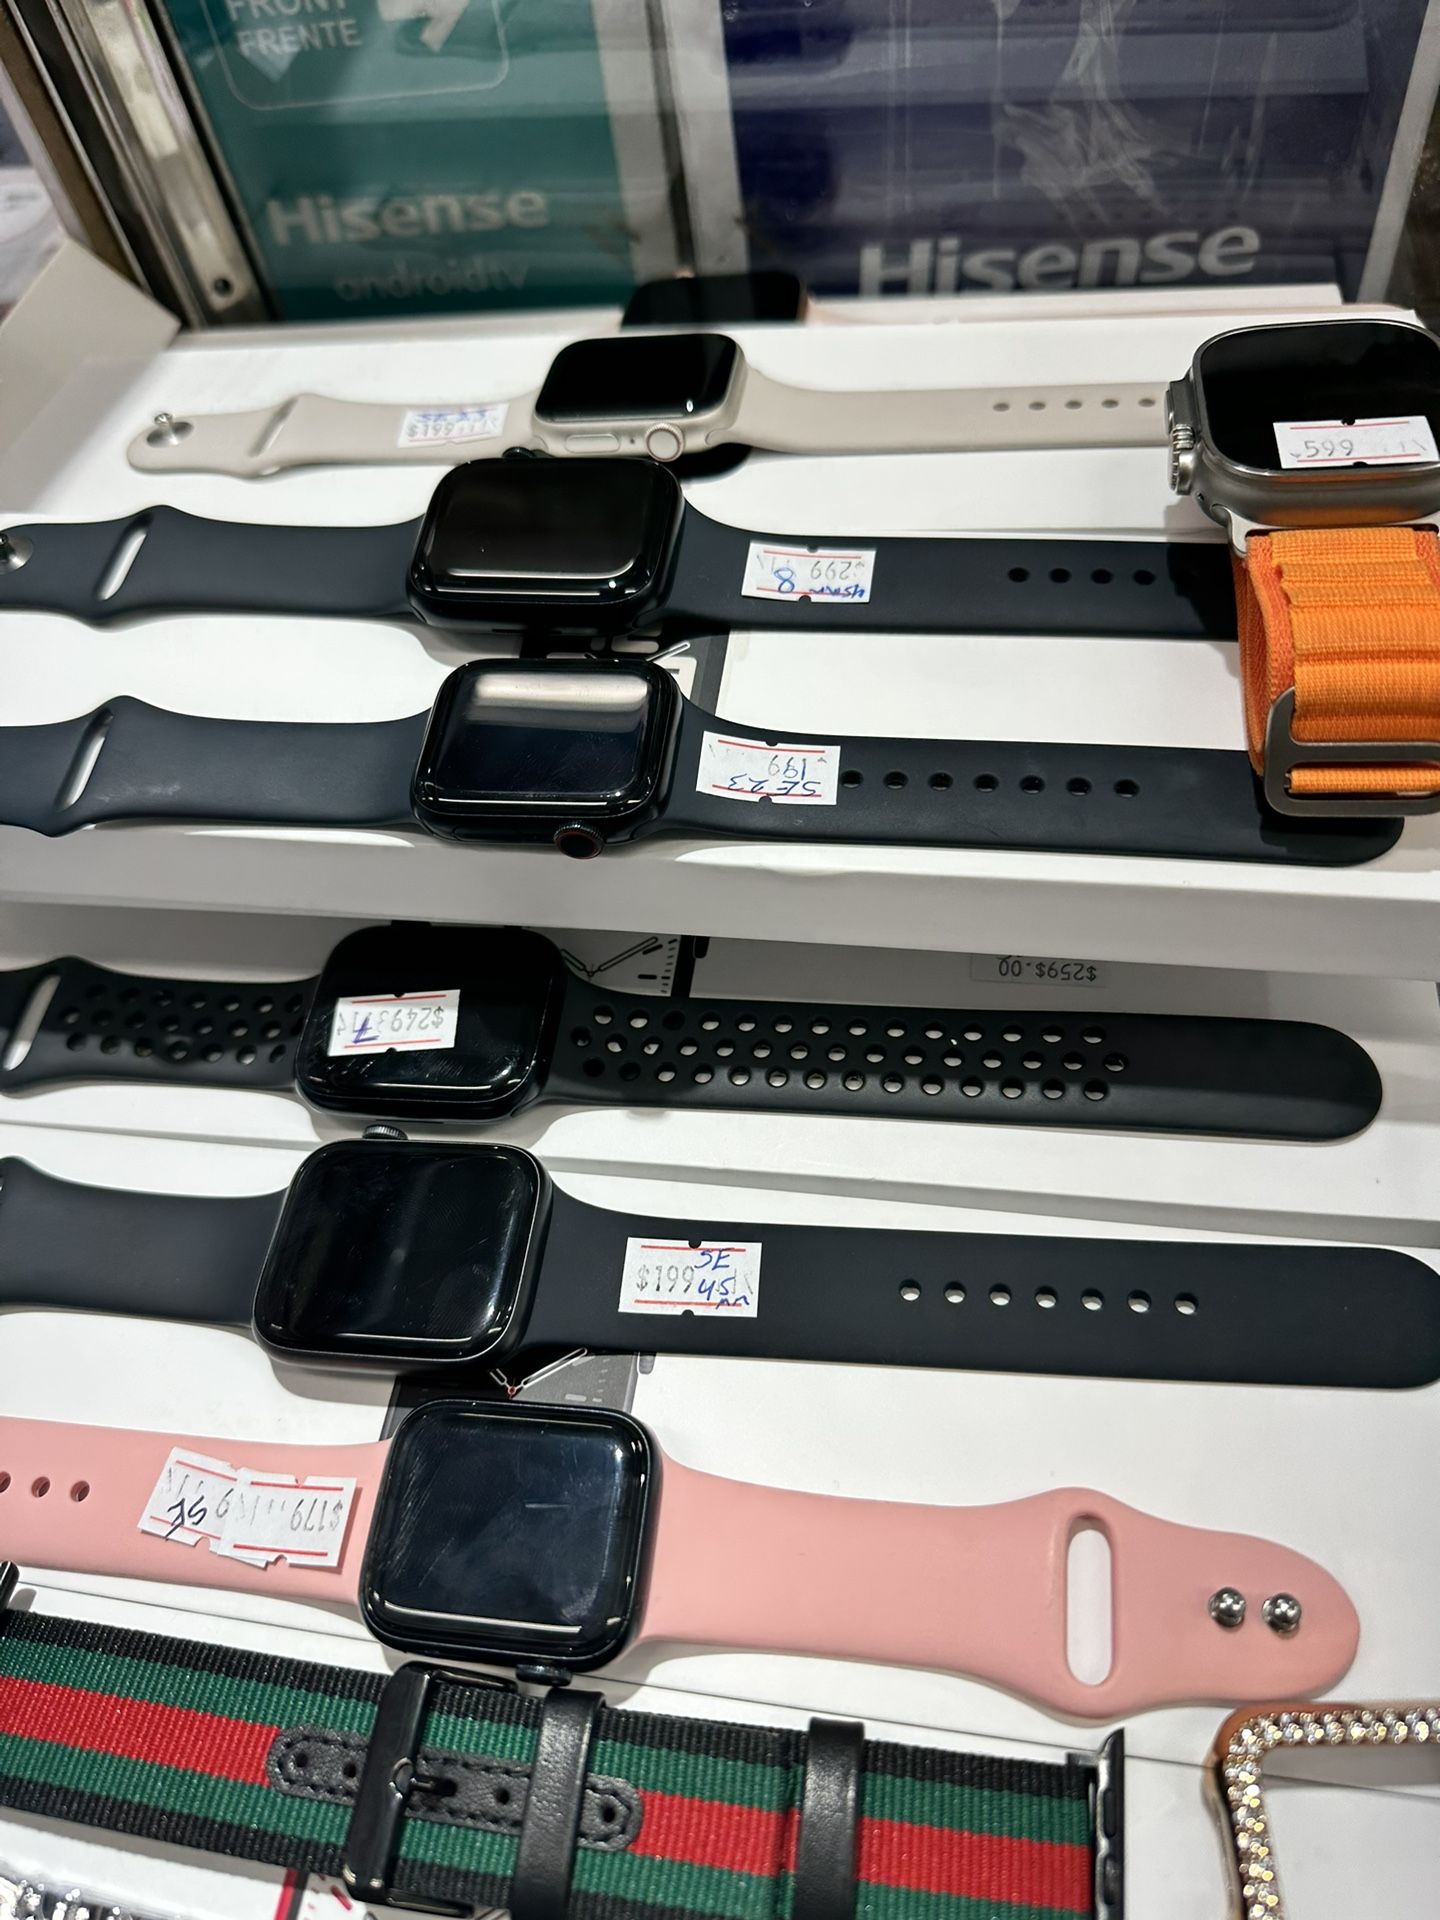 Used Apple Watch SE Latest Model $199